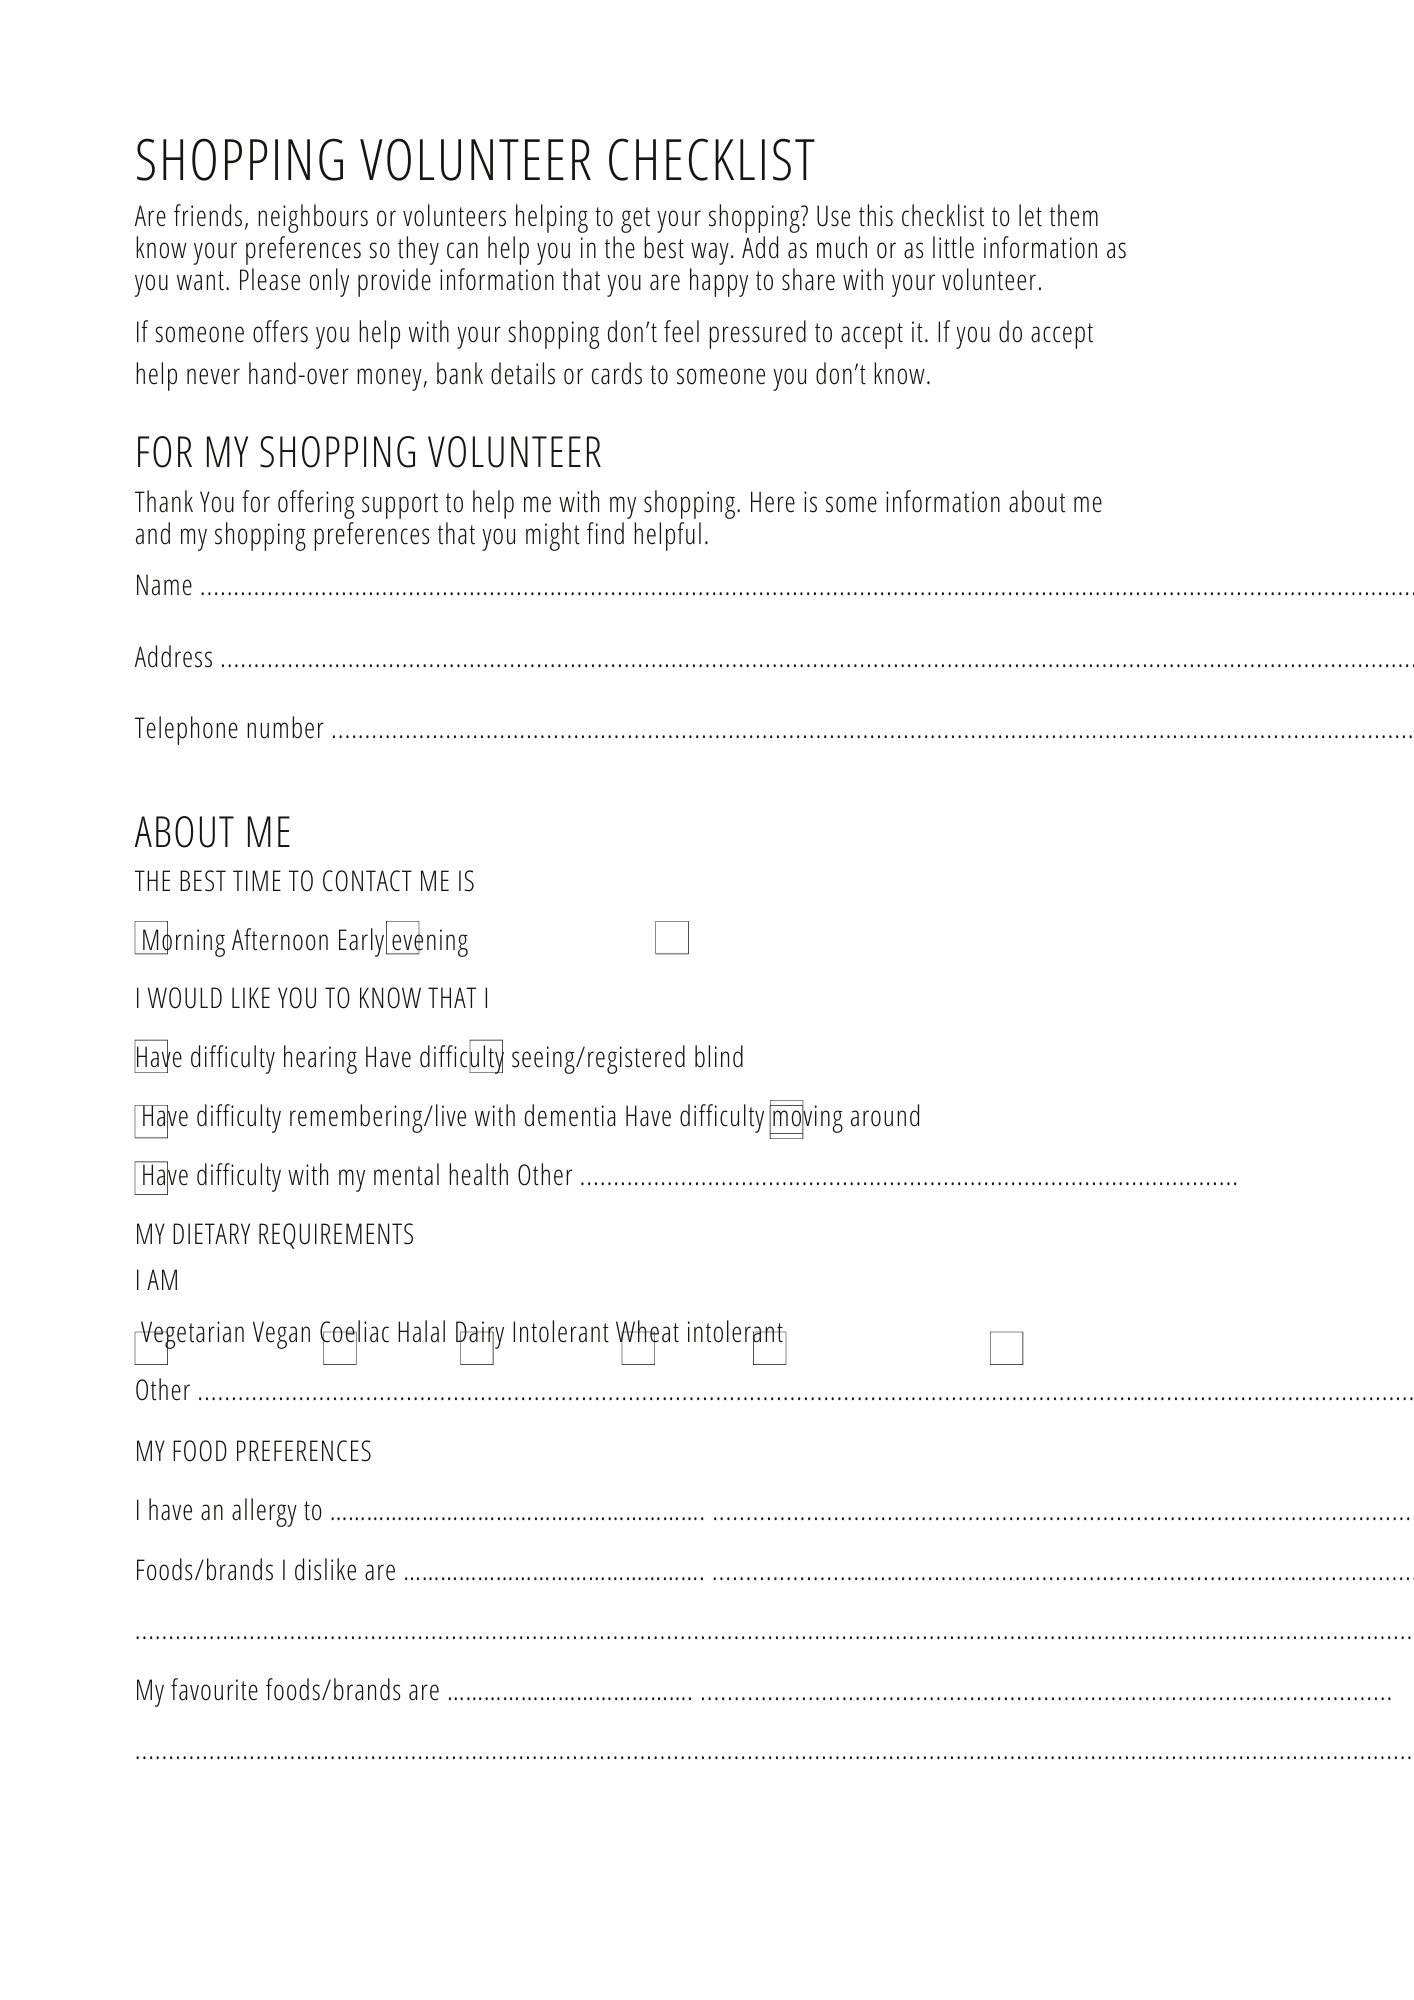 Shopping checklist screenshot